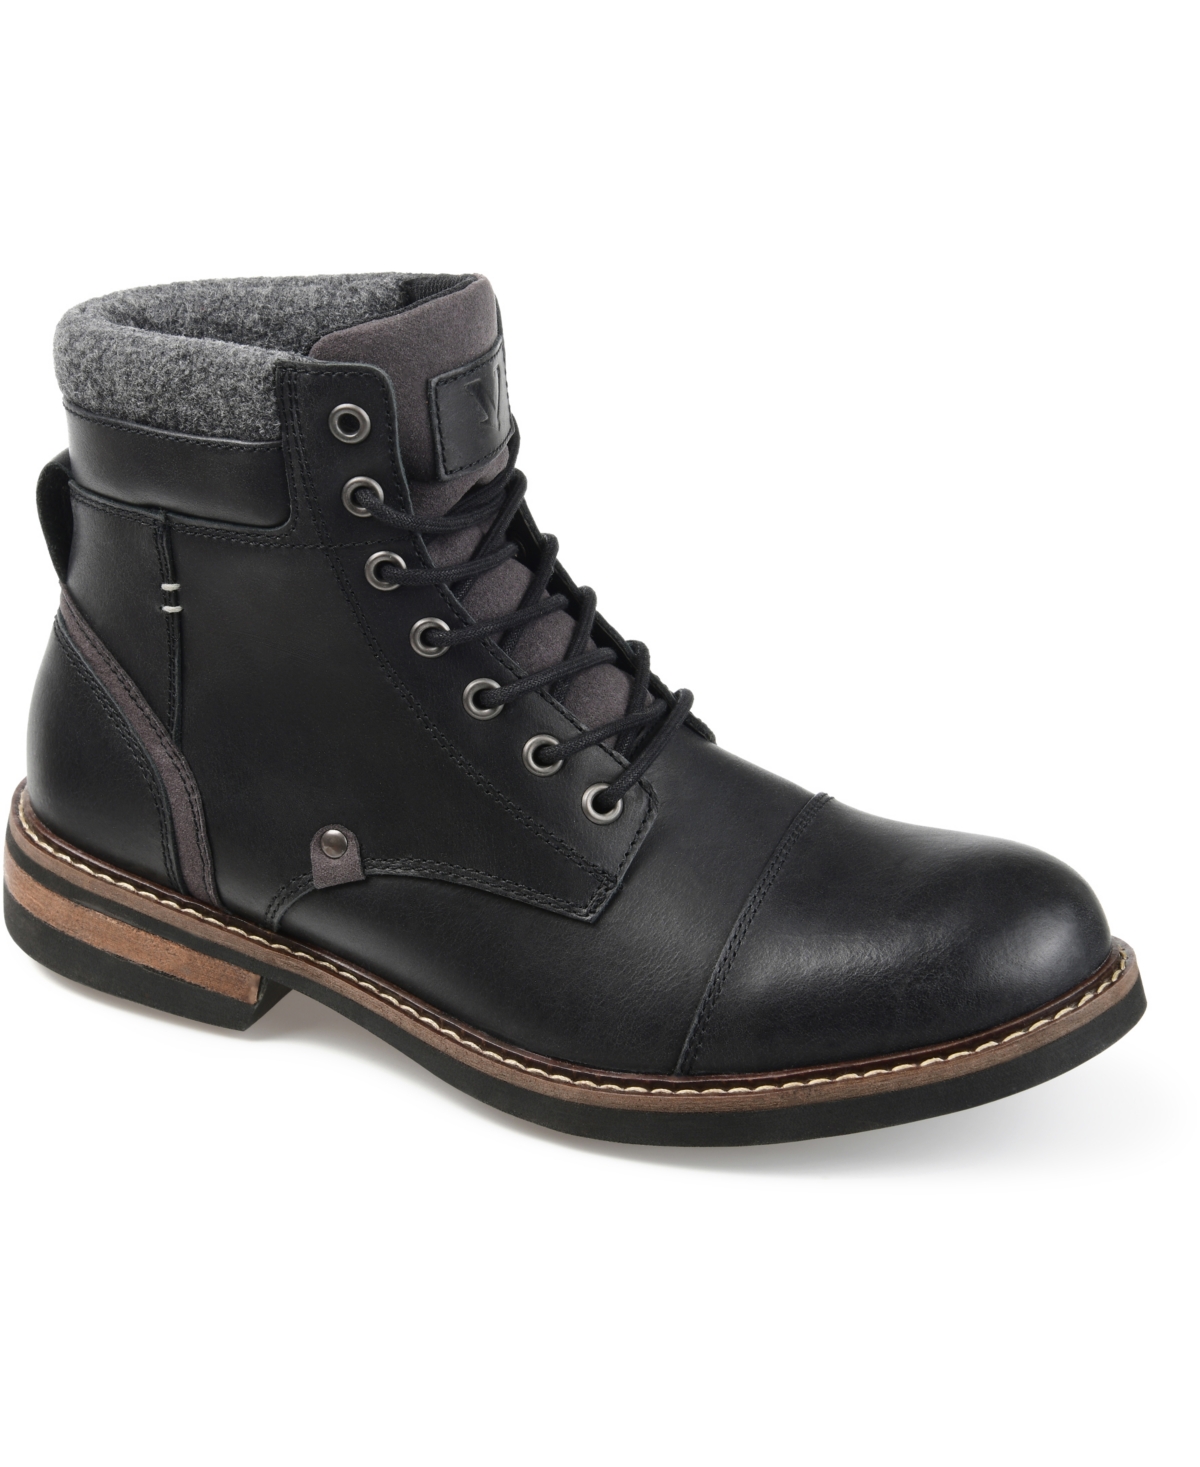 Men's Yukon Tru Comfort Foam Lace-up Cap Toe Ankle Boot - Black